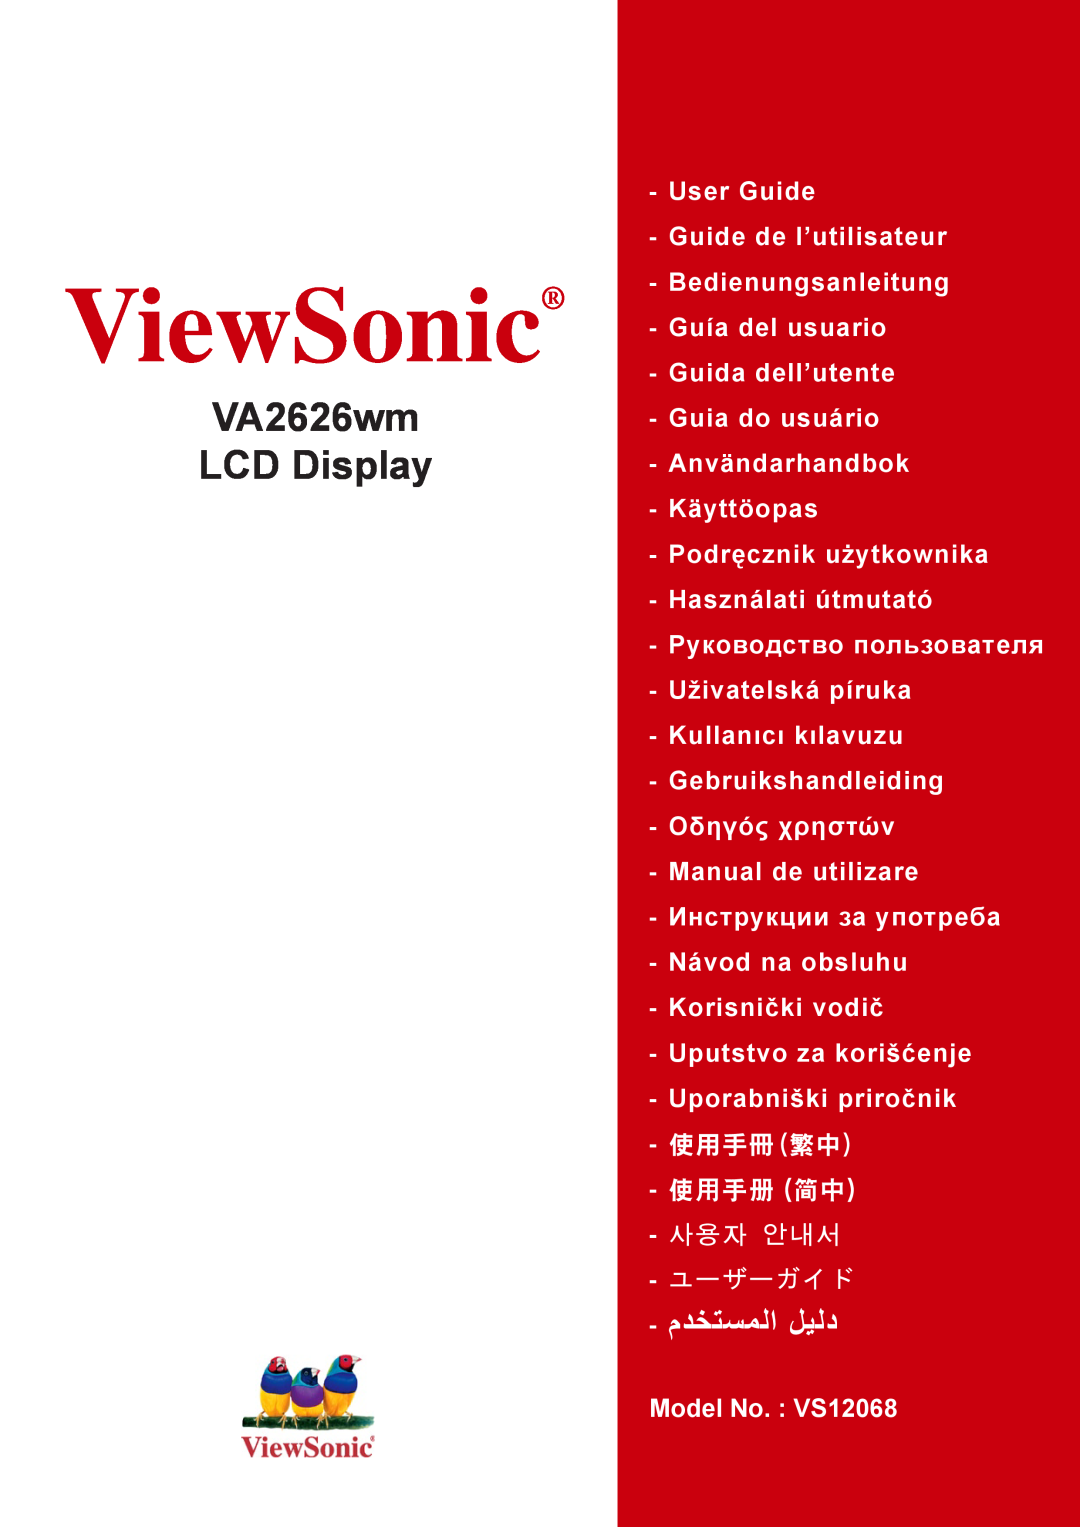 ViewSonic manual ViewSonic, VA2626wm LCD Display, ﻢﺪﺨﺘﺴﻤﻠﺍ ﻞﻴﻠﺪ, 使用手冊繁中 使用手冊 簡中, 사용자 안내서, ユーザーガイド 